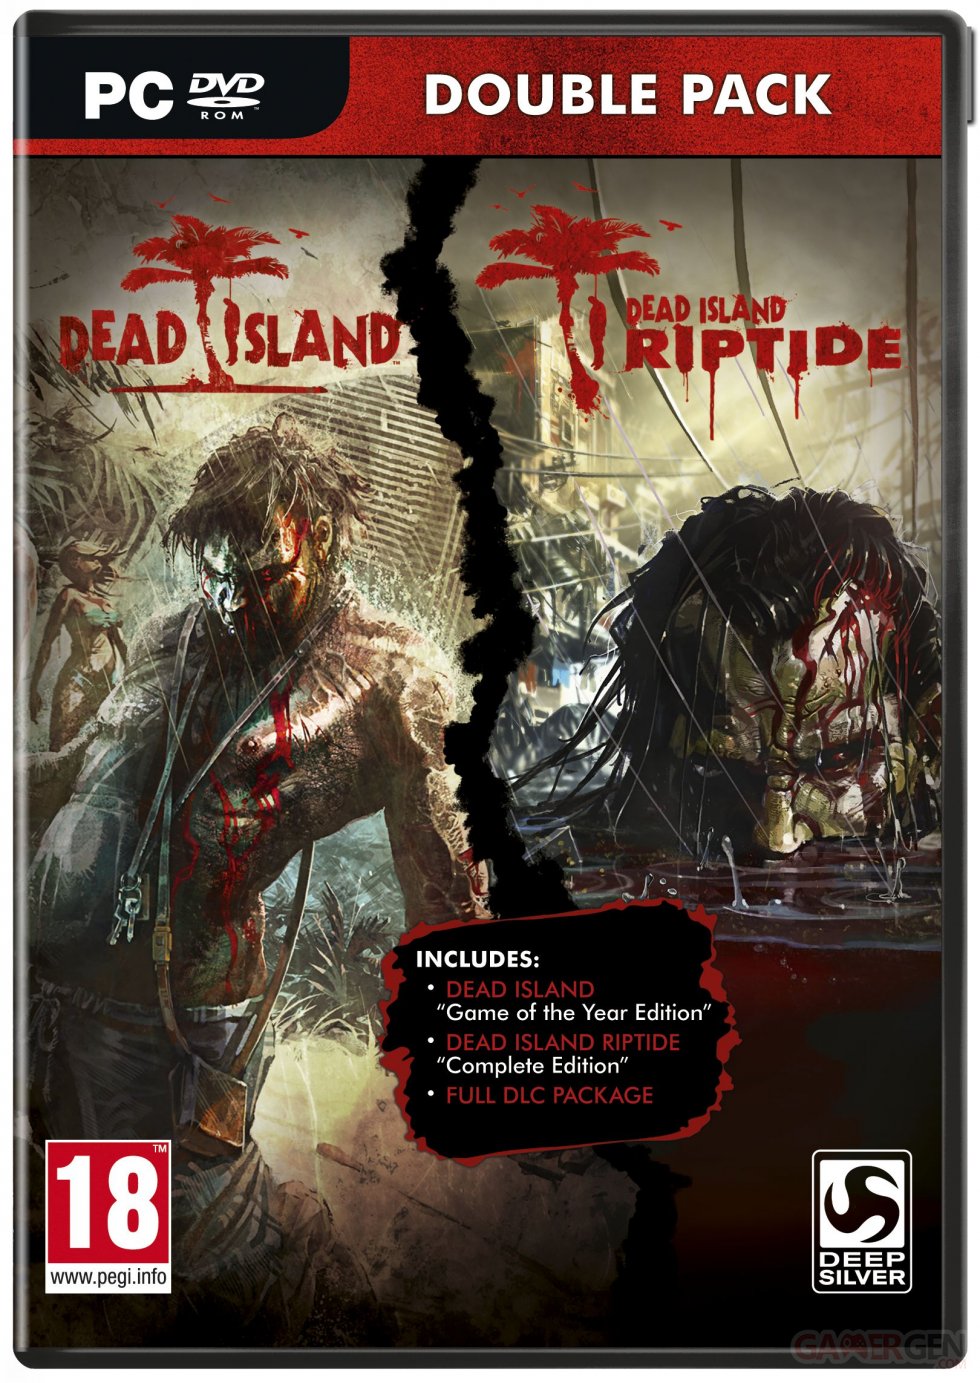 Dead Island Double Pack PC jaquette 16.05.2014